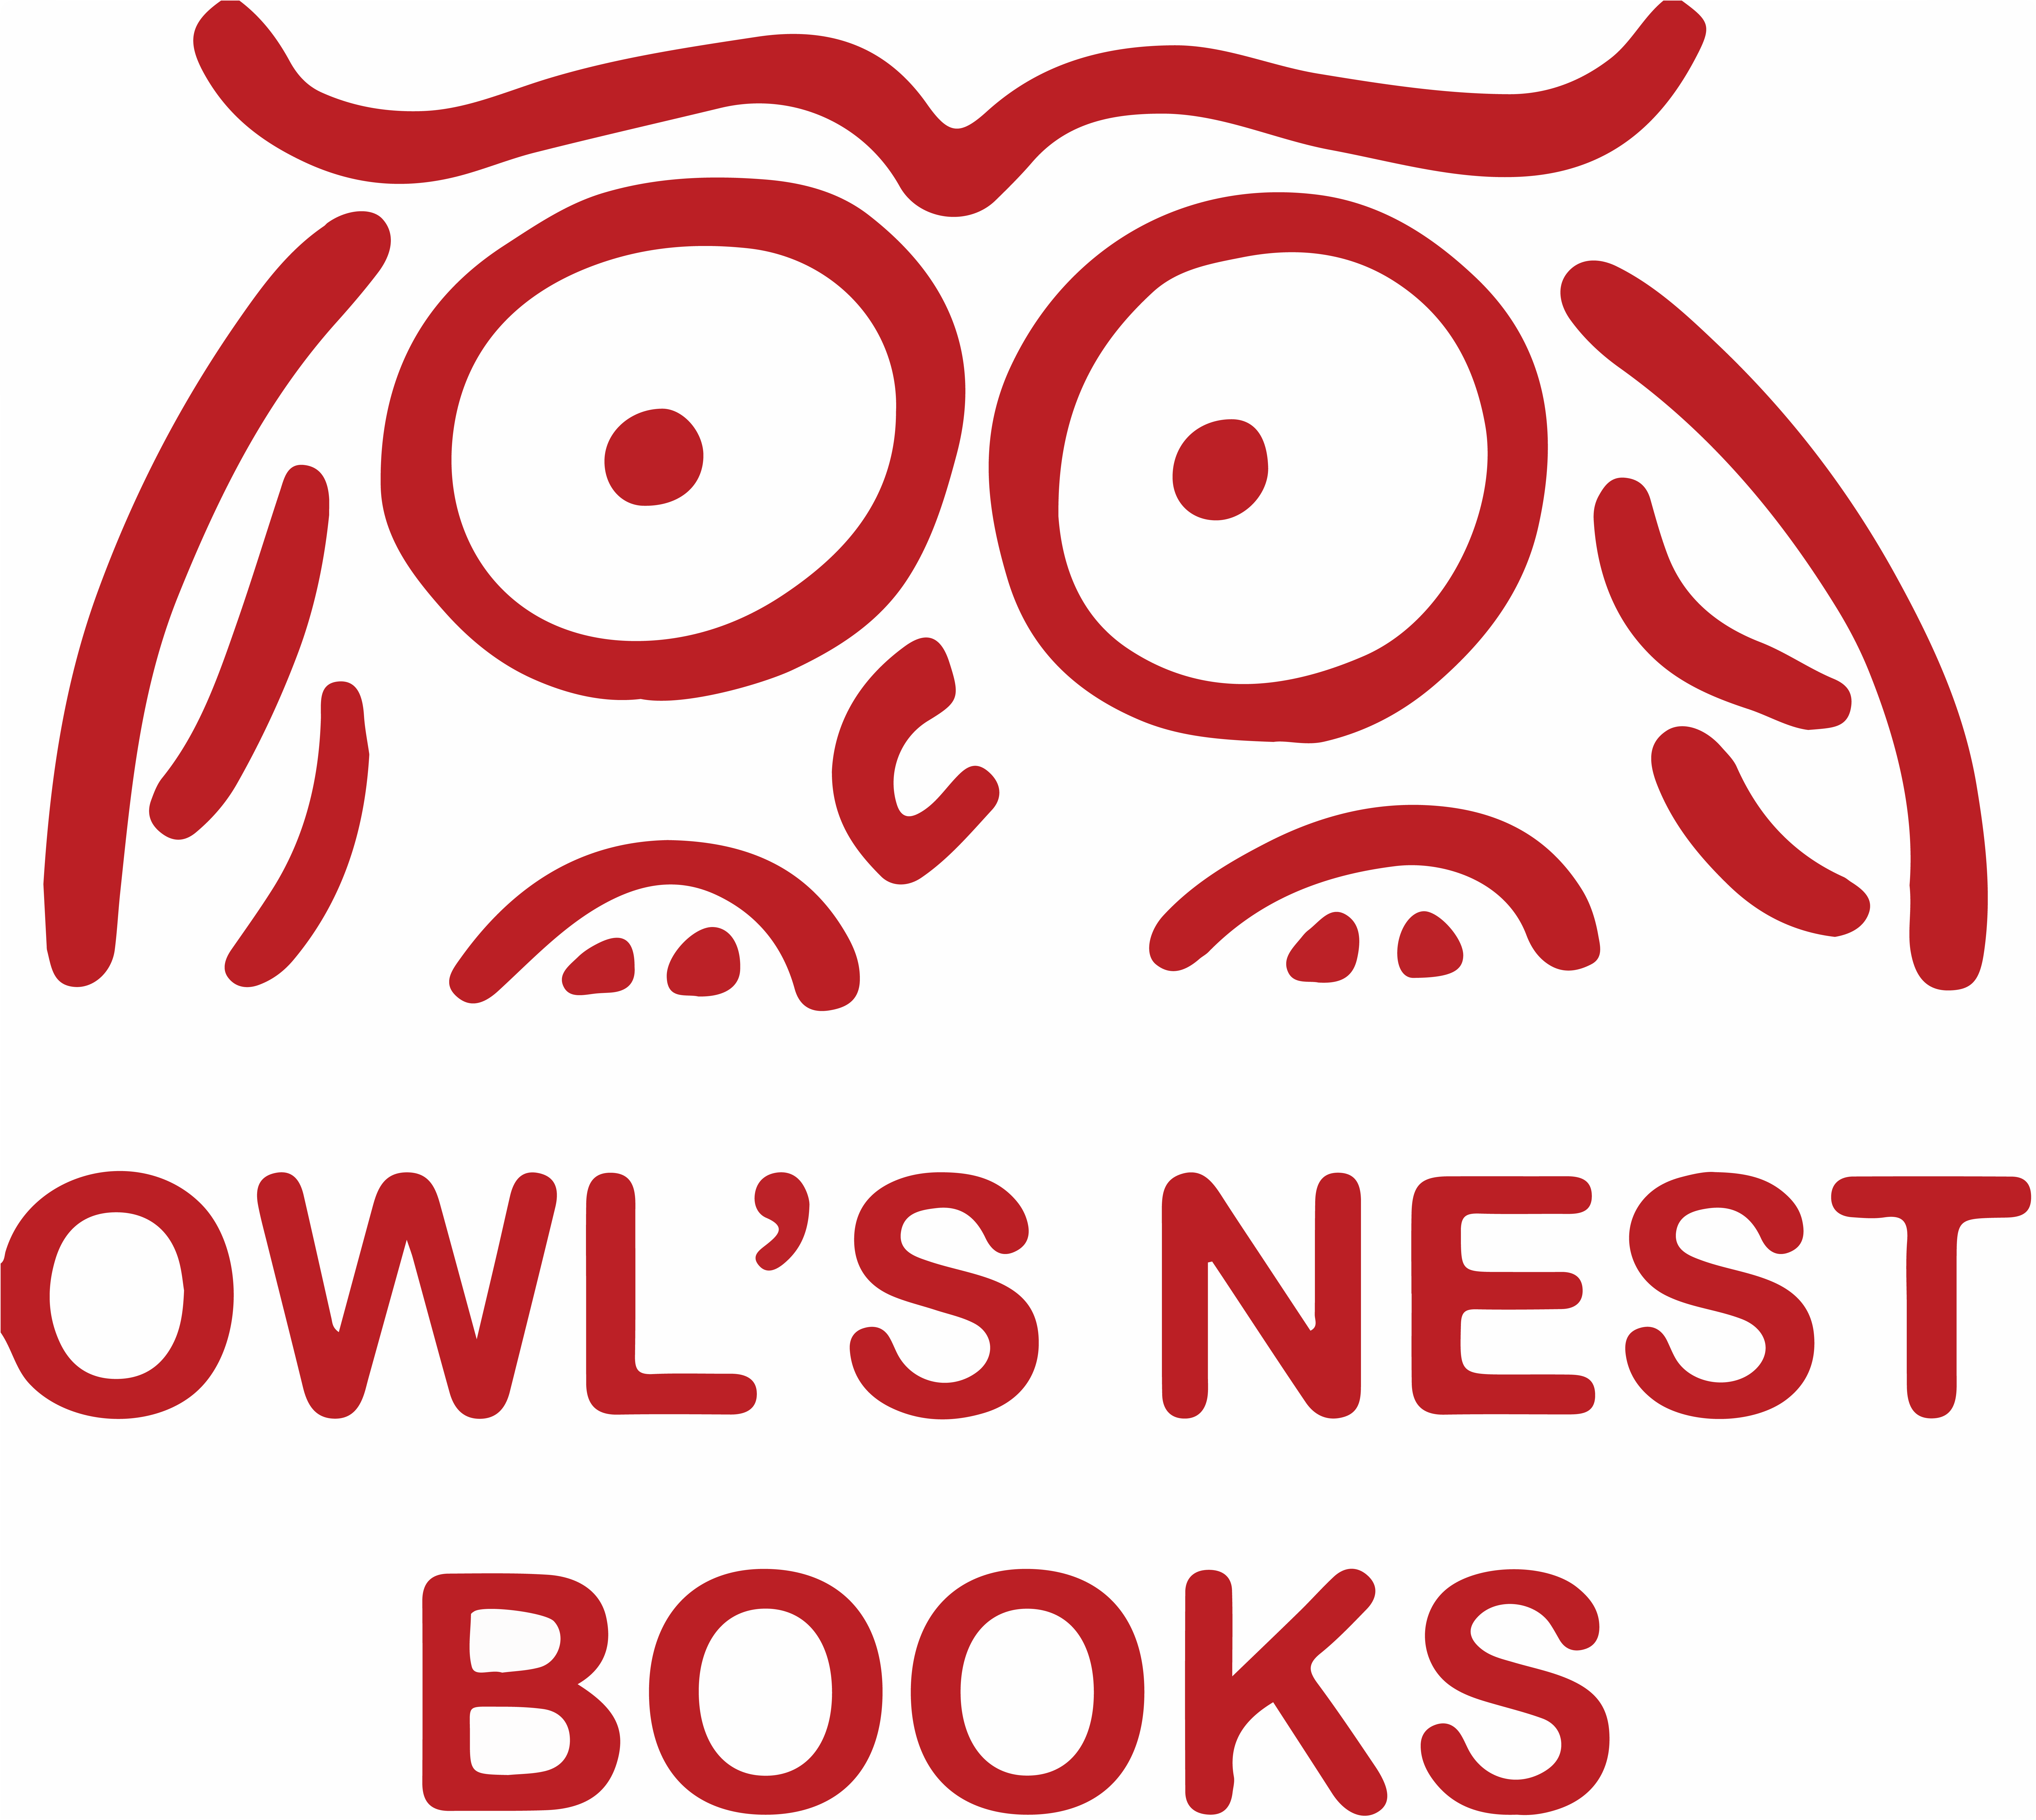 Owls Nest Books